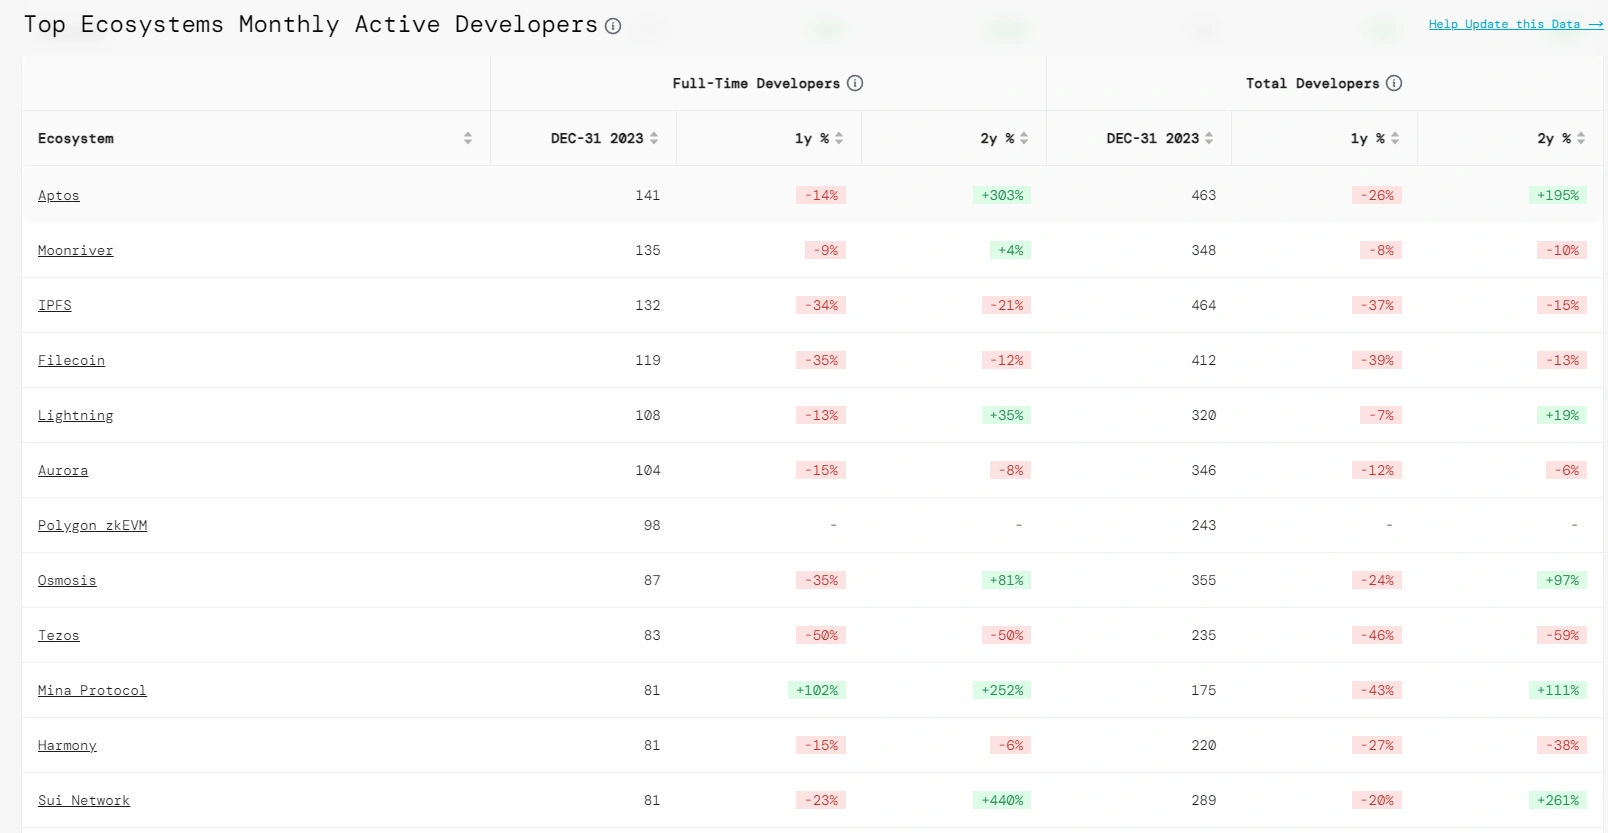 Aptos顶级生态月度全职开发者已达141名